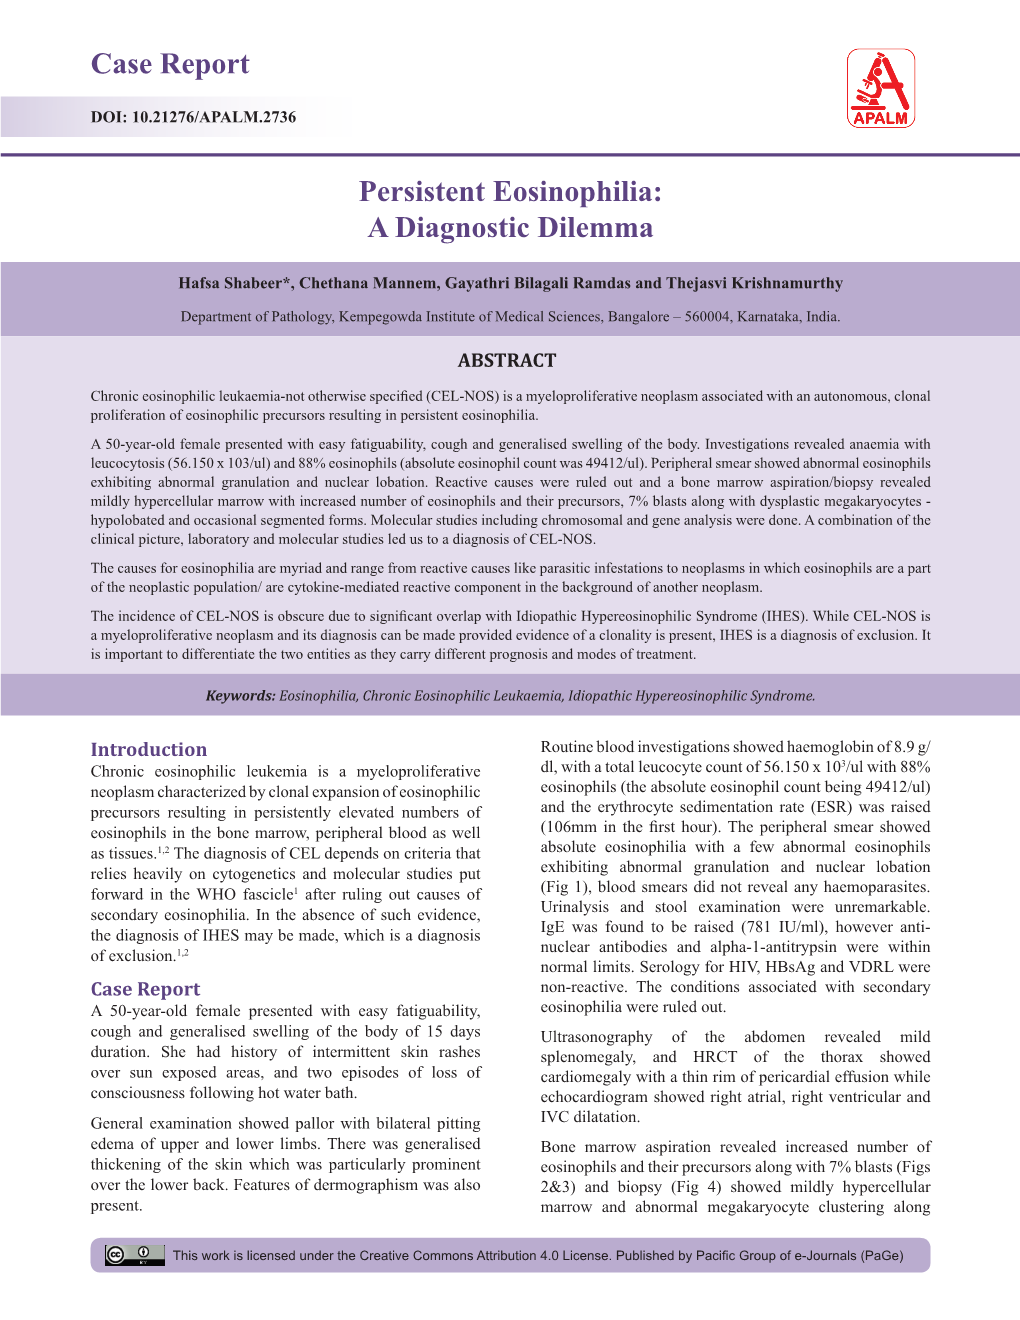 Case Report Persistent Eosinophilia: a Diagnostic Dilemma